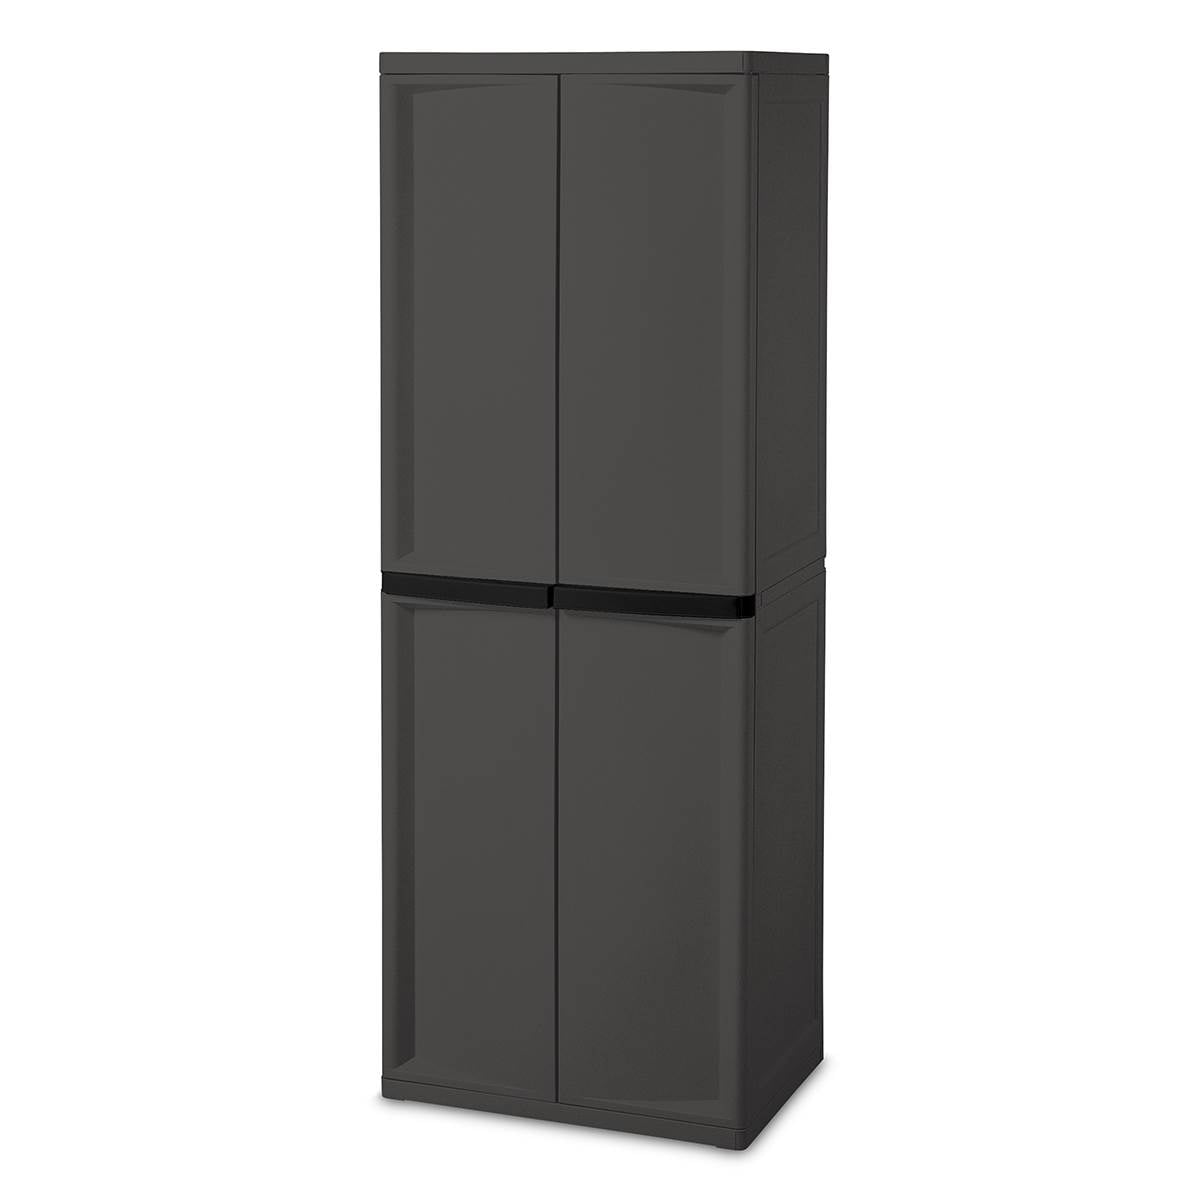 Sterilite Adjustable 4-Shelf Storage Cabinet With Doors, Gray | 01423V01 - 2